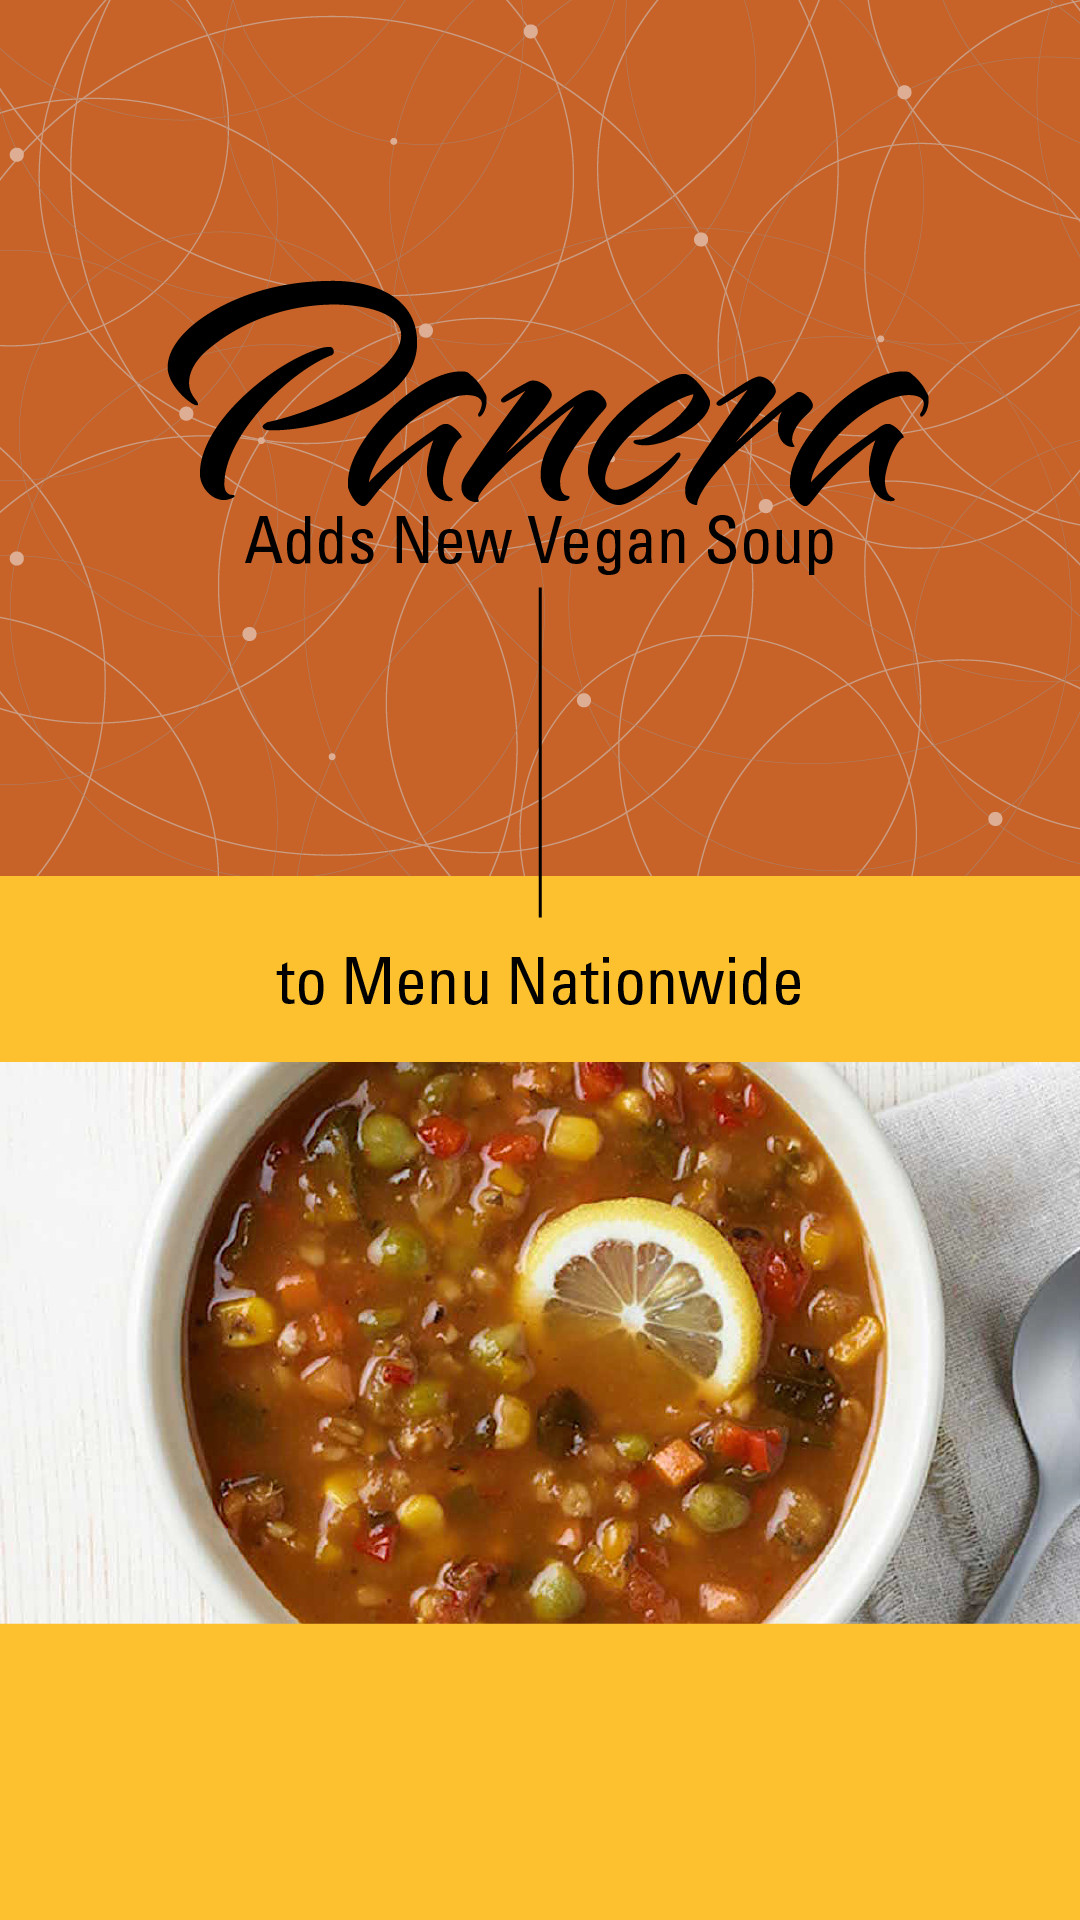 Panera Bread Vegan Menu
 Panera Adds New Vegan Soup to Menu Nationwide